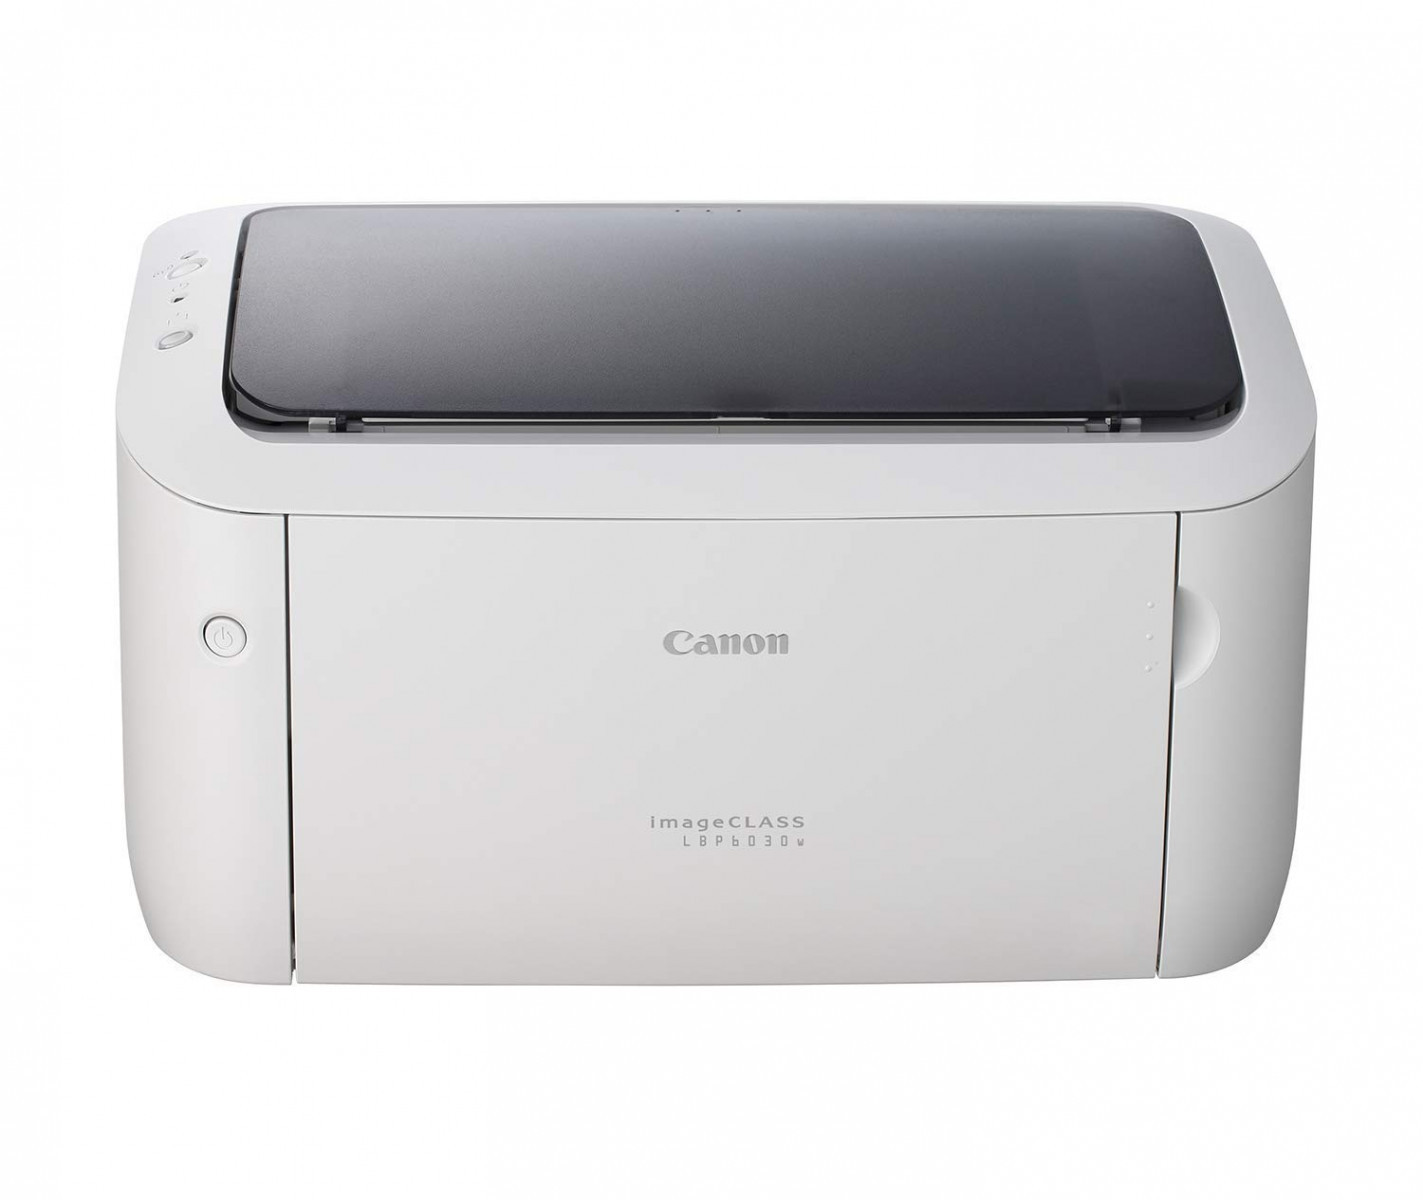 Canon imageCLASS LBP6030W Wi-Fi Mono Printer Windows Mac and Linux Support